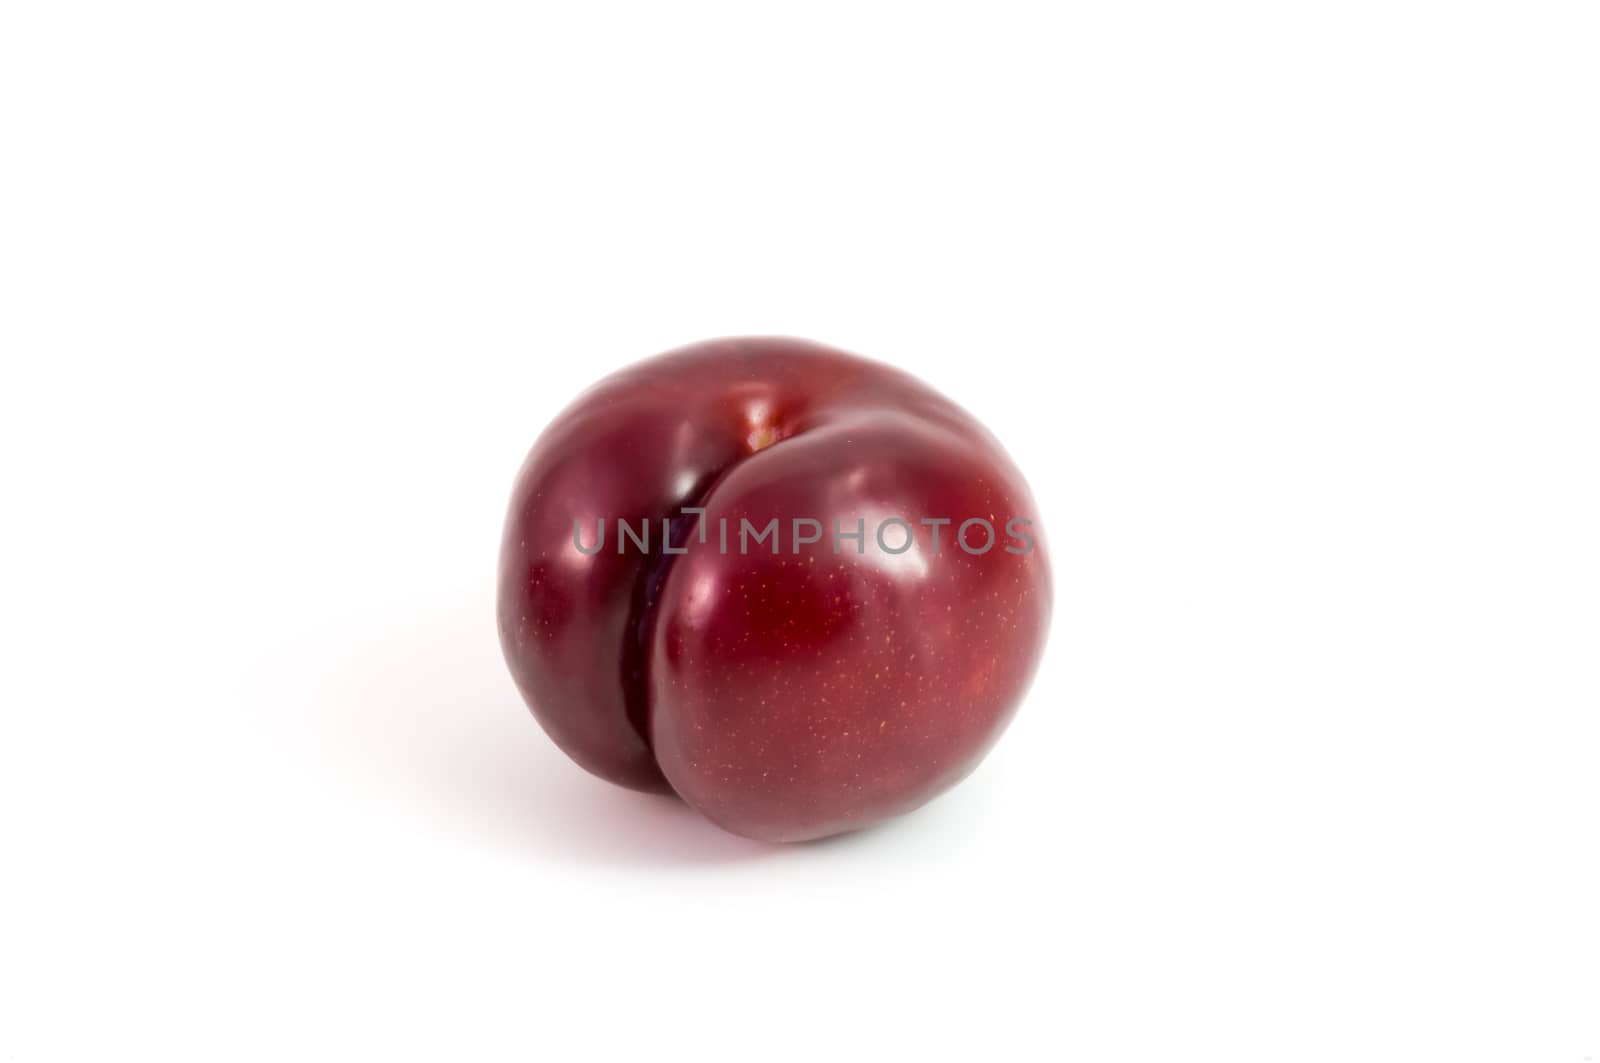 Prunes Plum fruit isolated on white